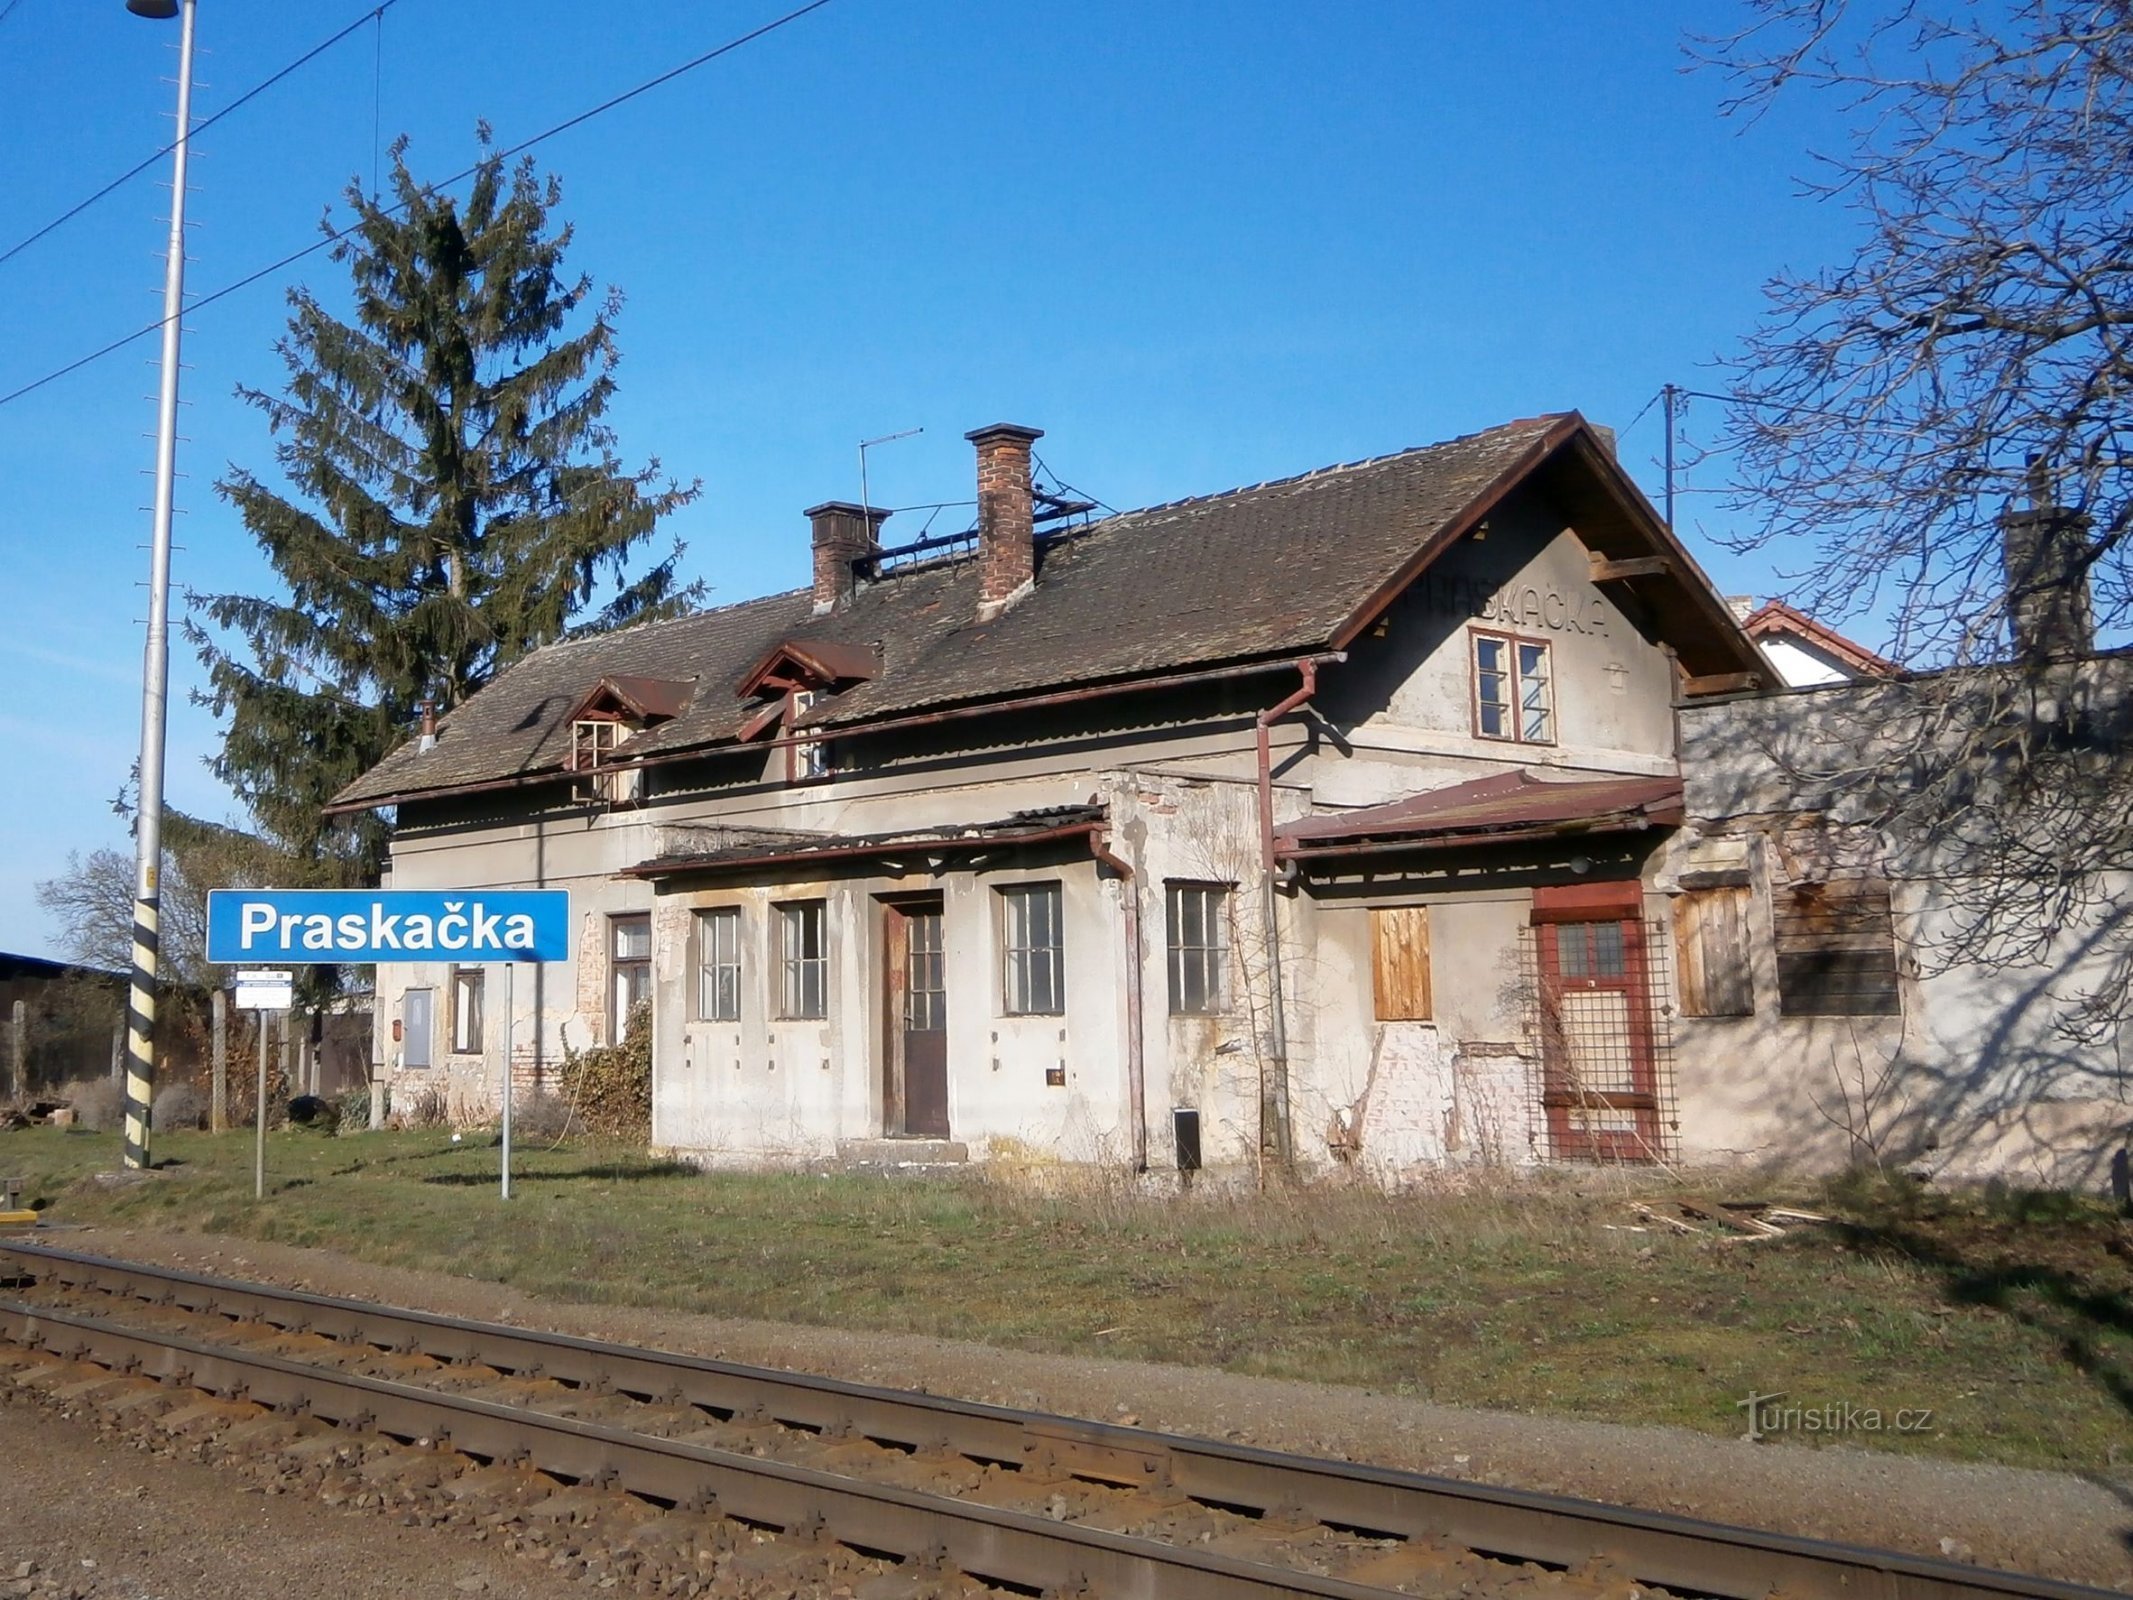 Reeds afgebroken oud treinstation (Praskačka, 26.3.2017/XNUMX/XNUMX)